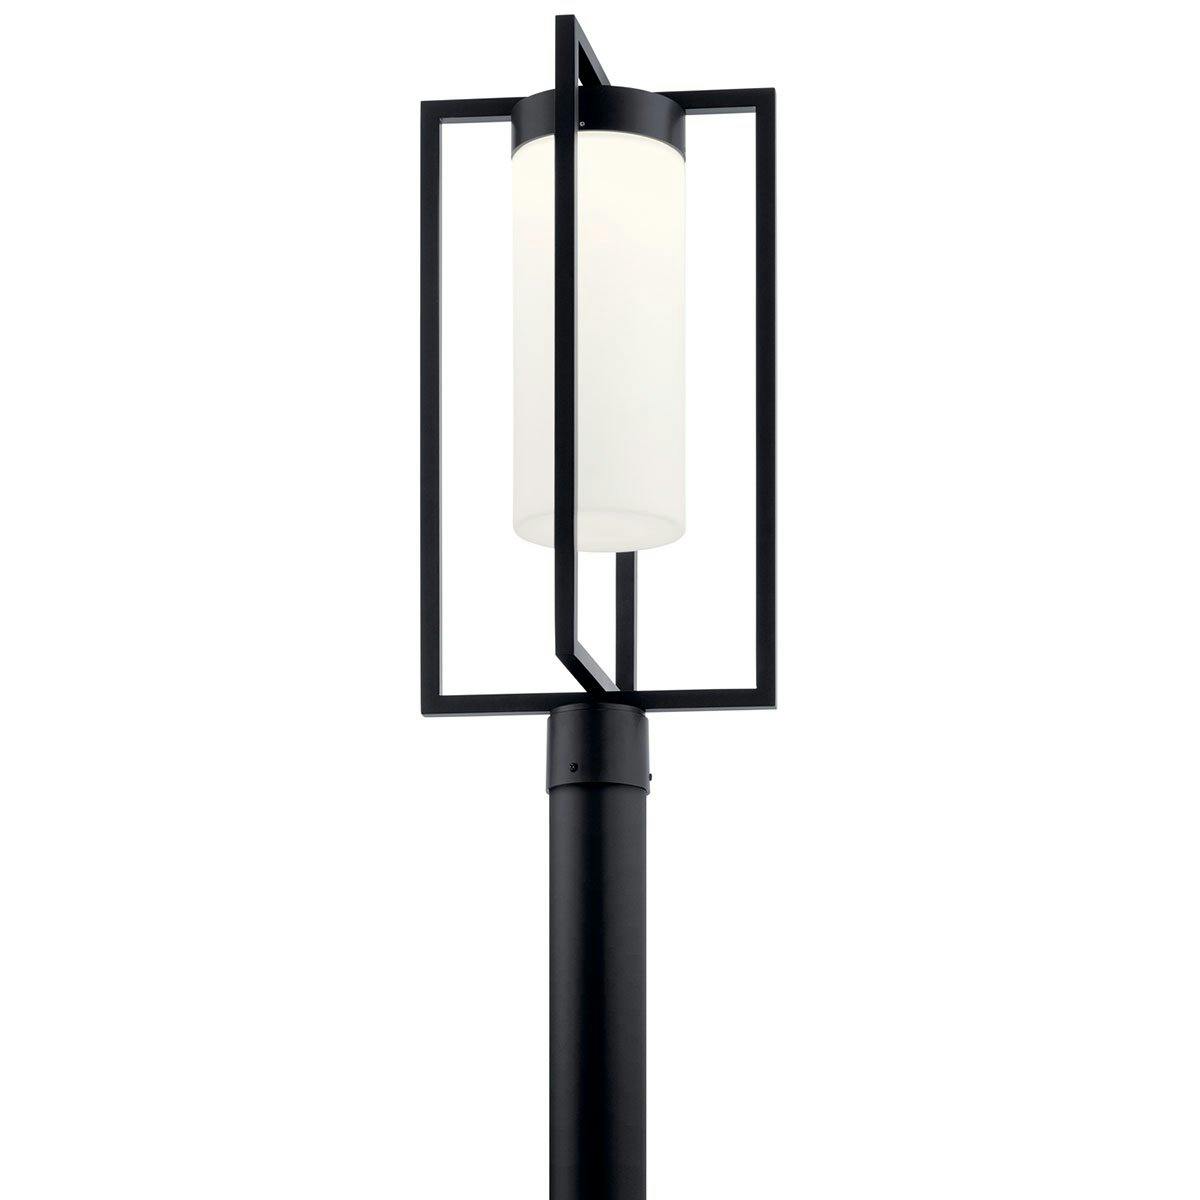 Drega 24" 1 LED Post Light Glass Black on a white background